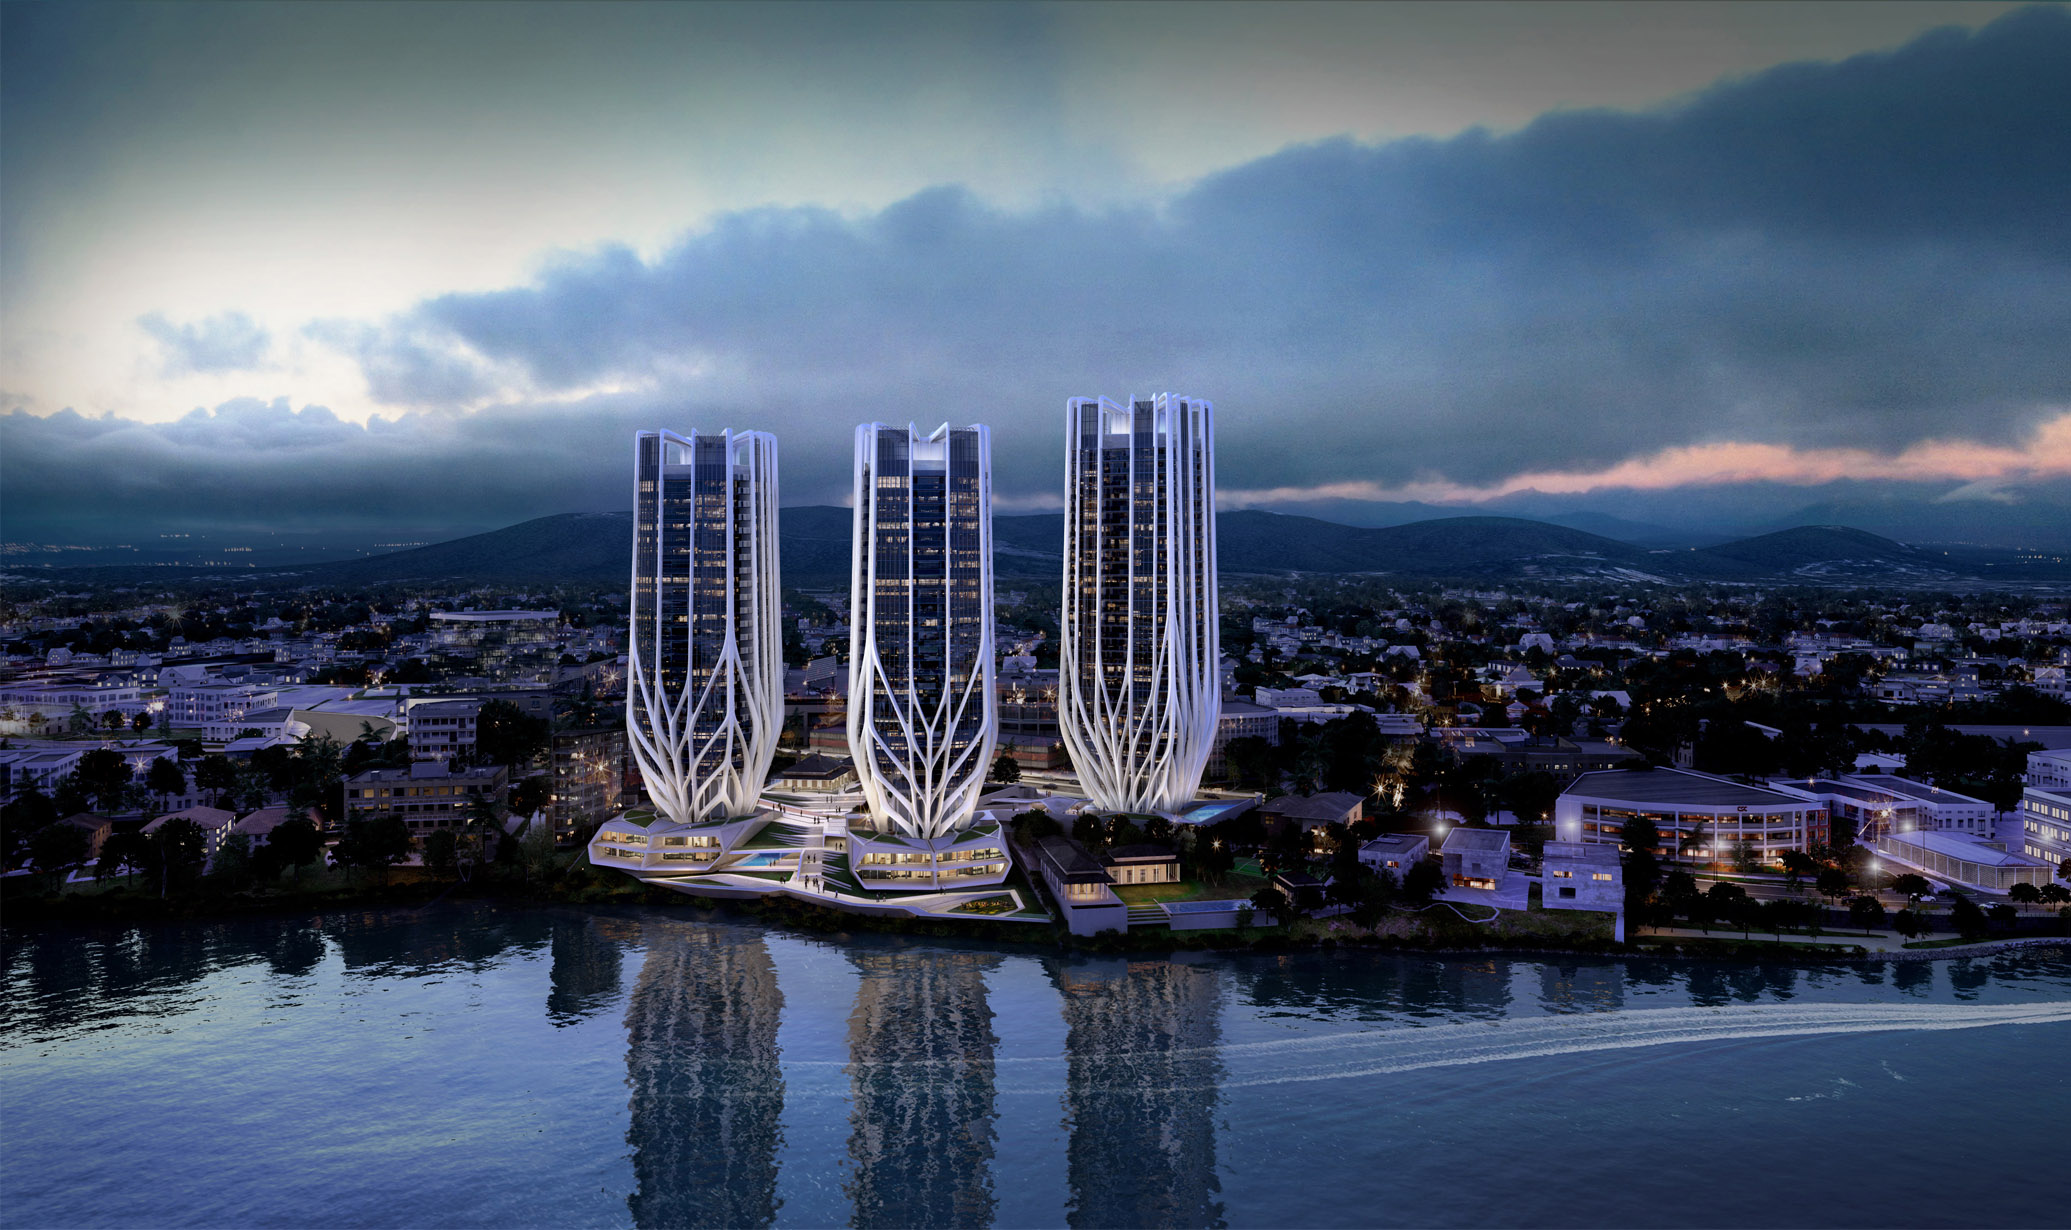 Zaha Hadid designed buildings